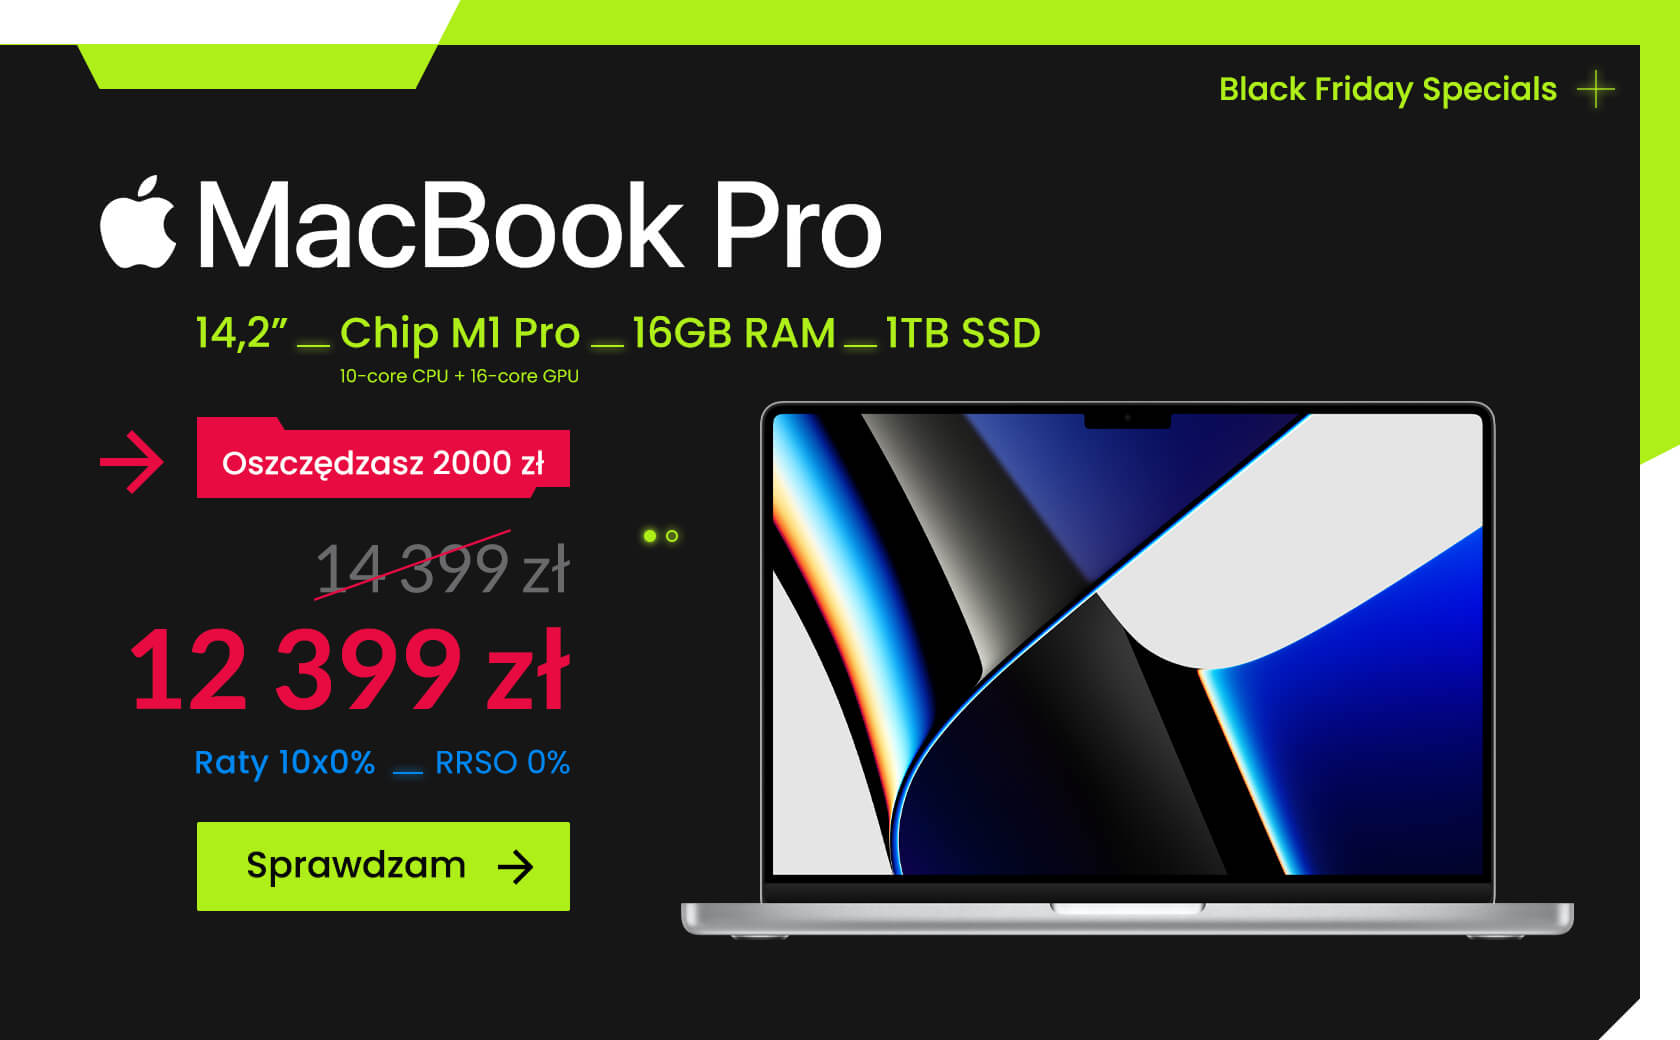 Black Friday Specials - MacBook Pro 14